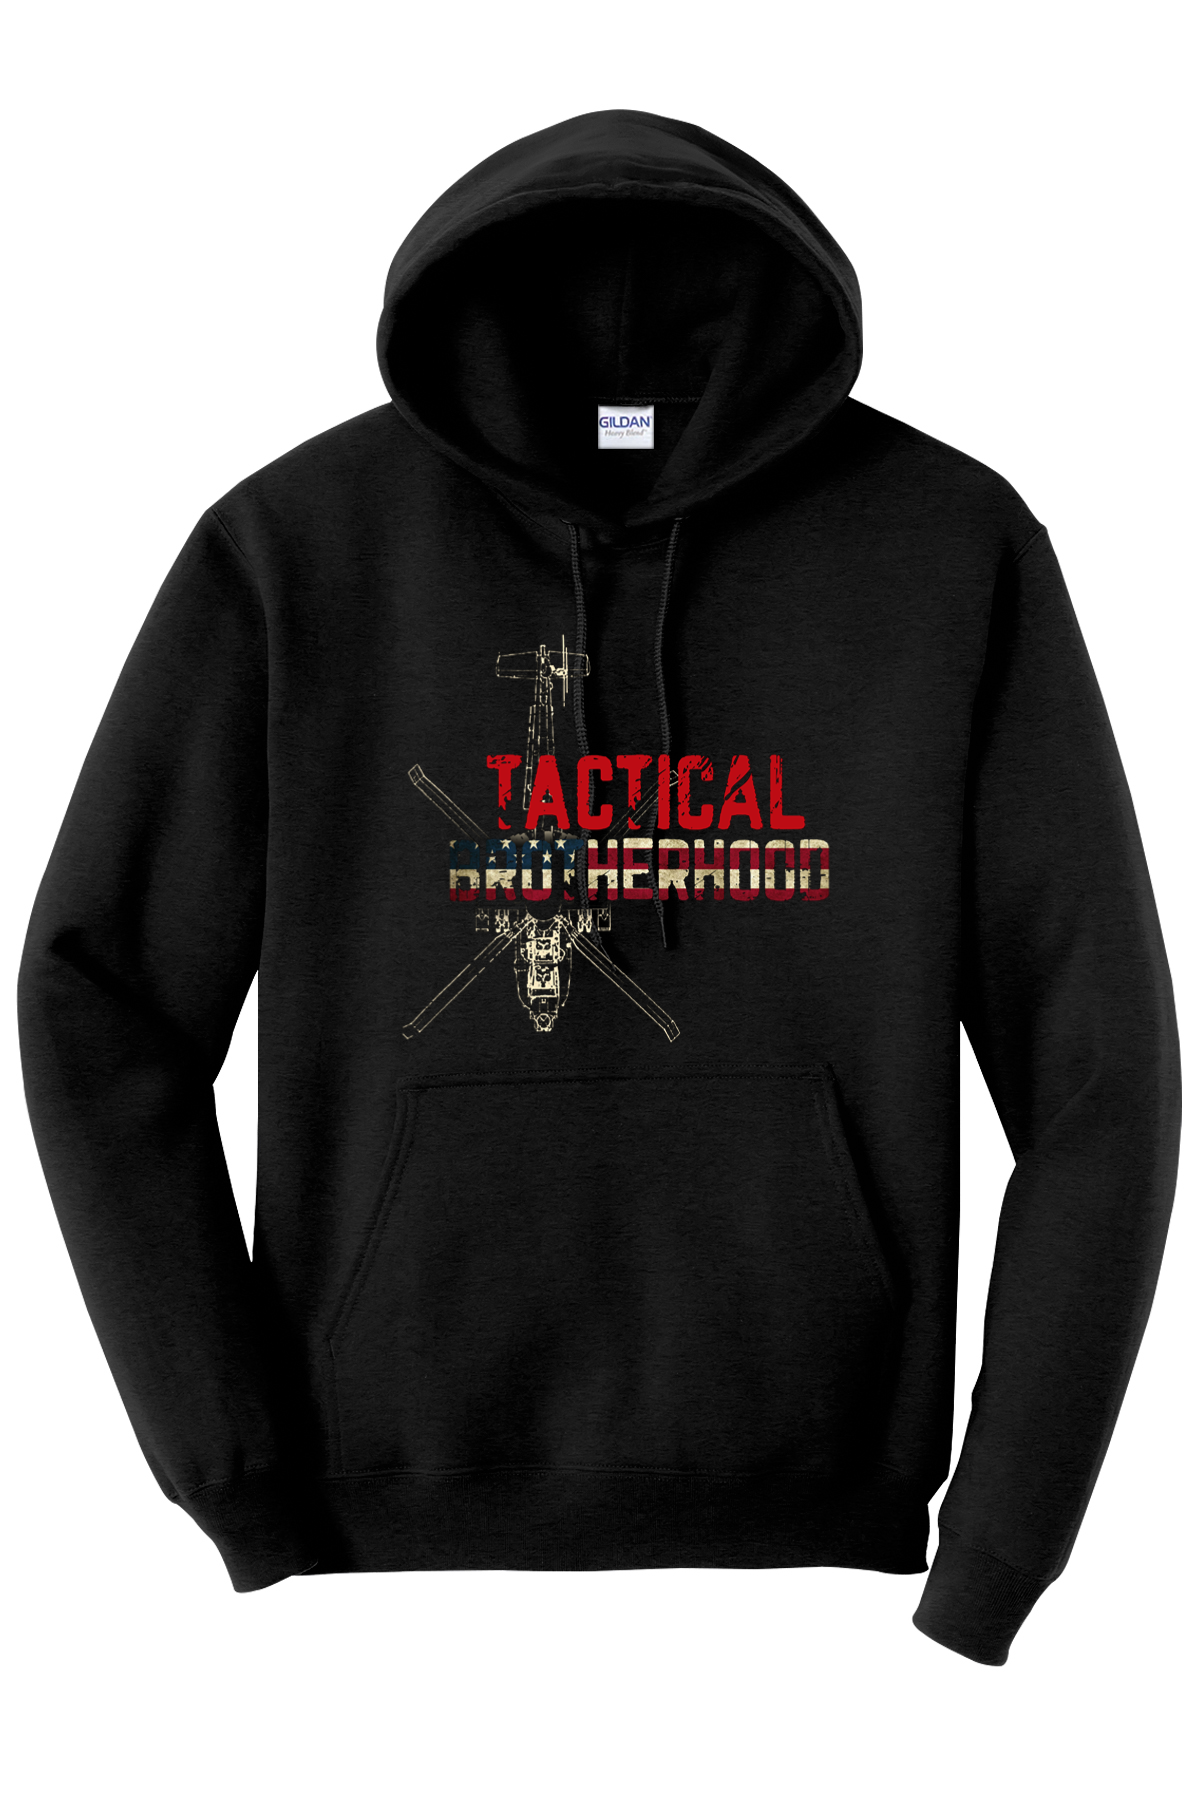 Apache 2 - Tactical Brotherhood Hoodie